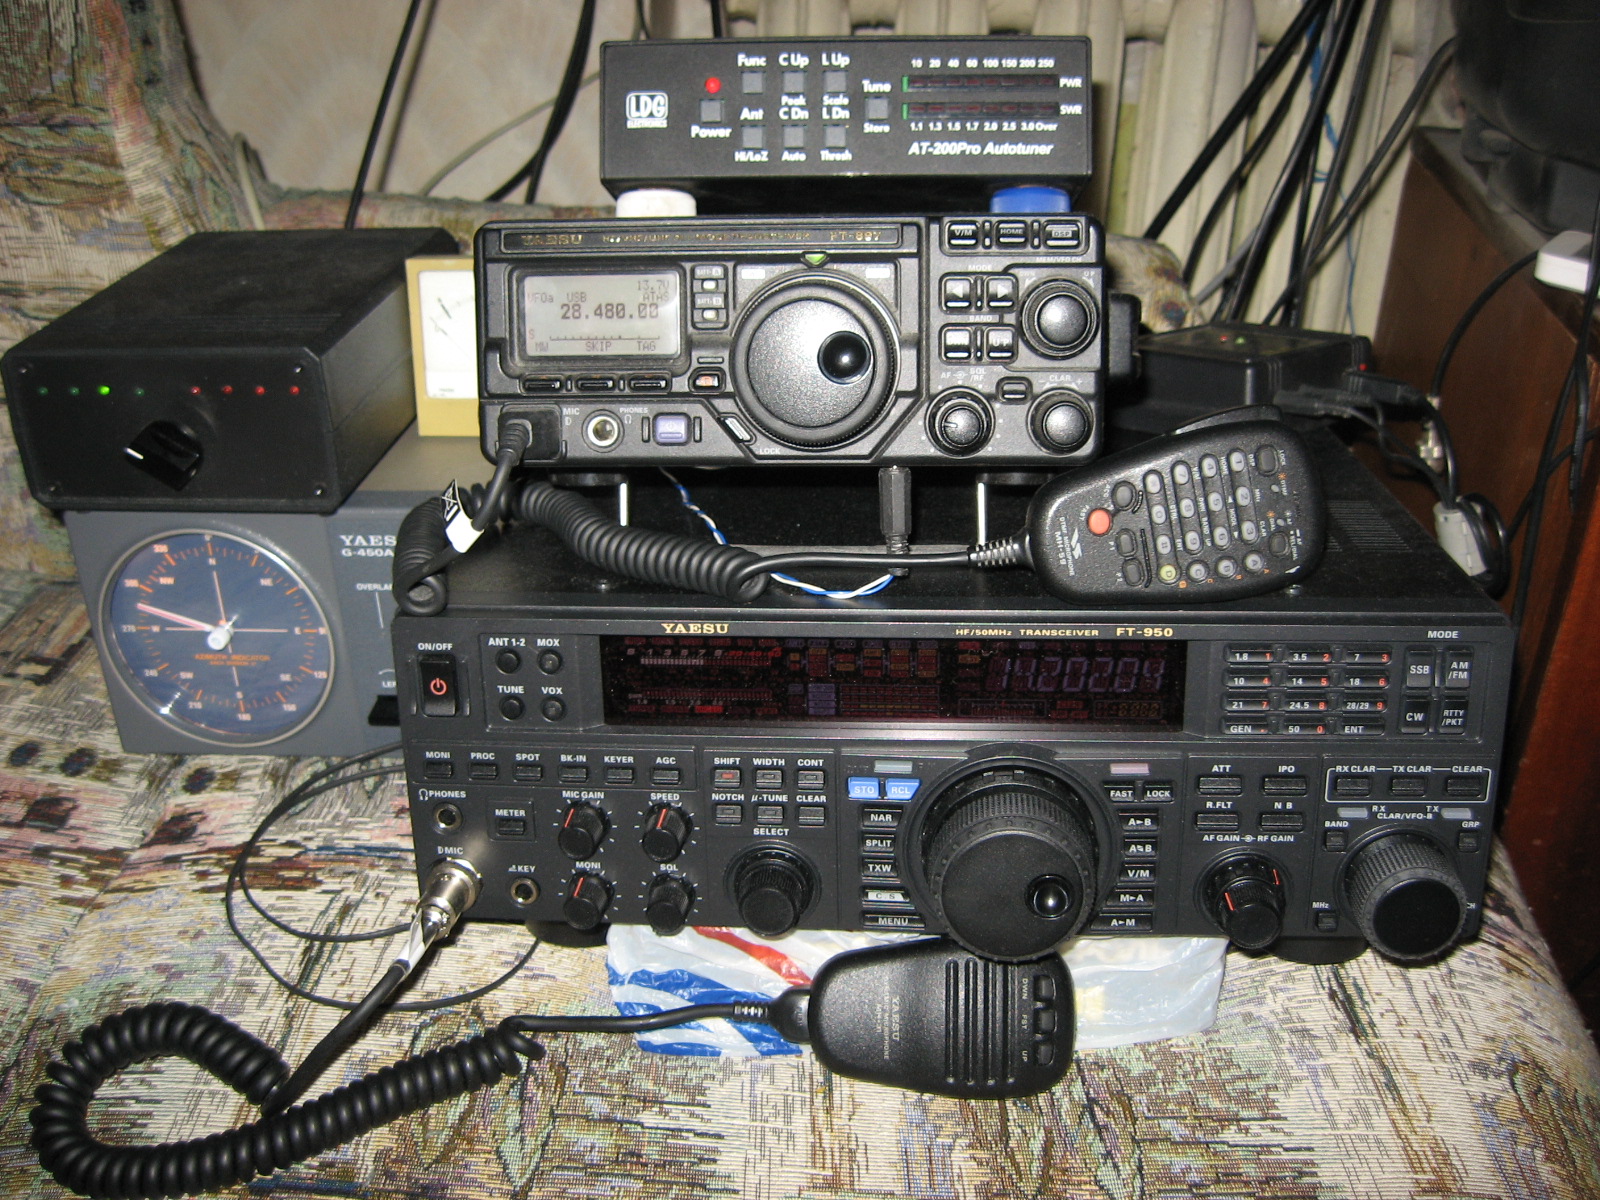 Про радиостанцию. ФТ 950 трансивер. Yaesu ft-950. Yaesu ft-950 Digital Terminal. Трансивер Yaesu Радиолюбительский.